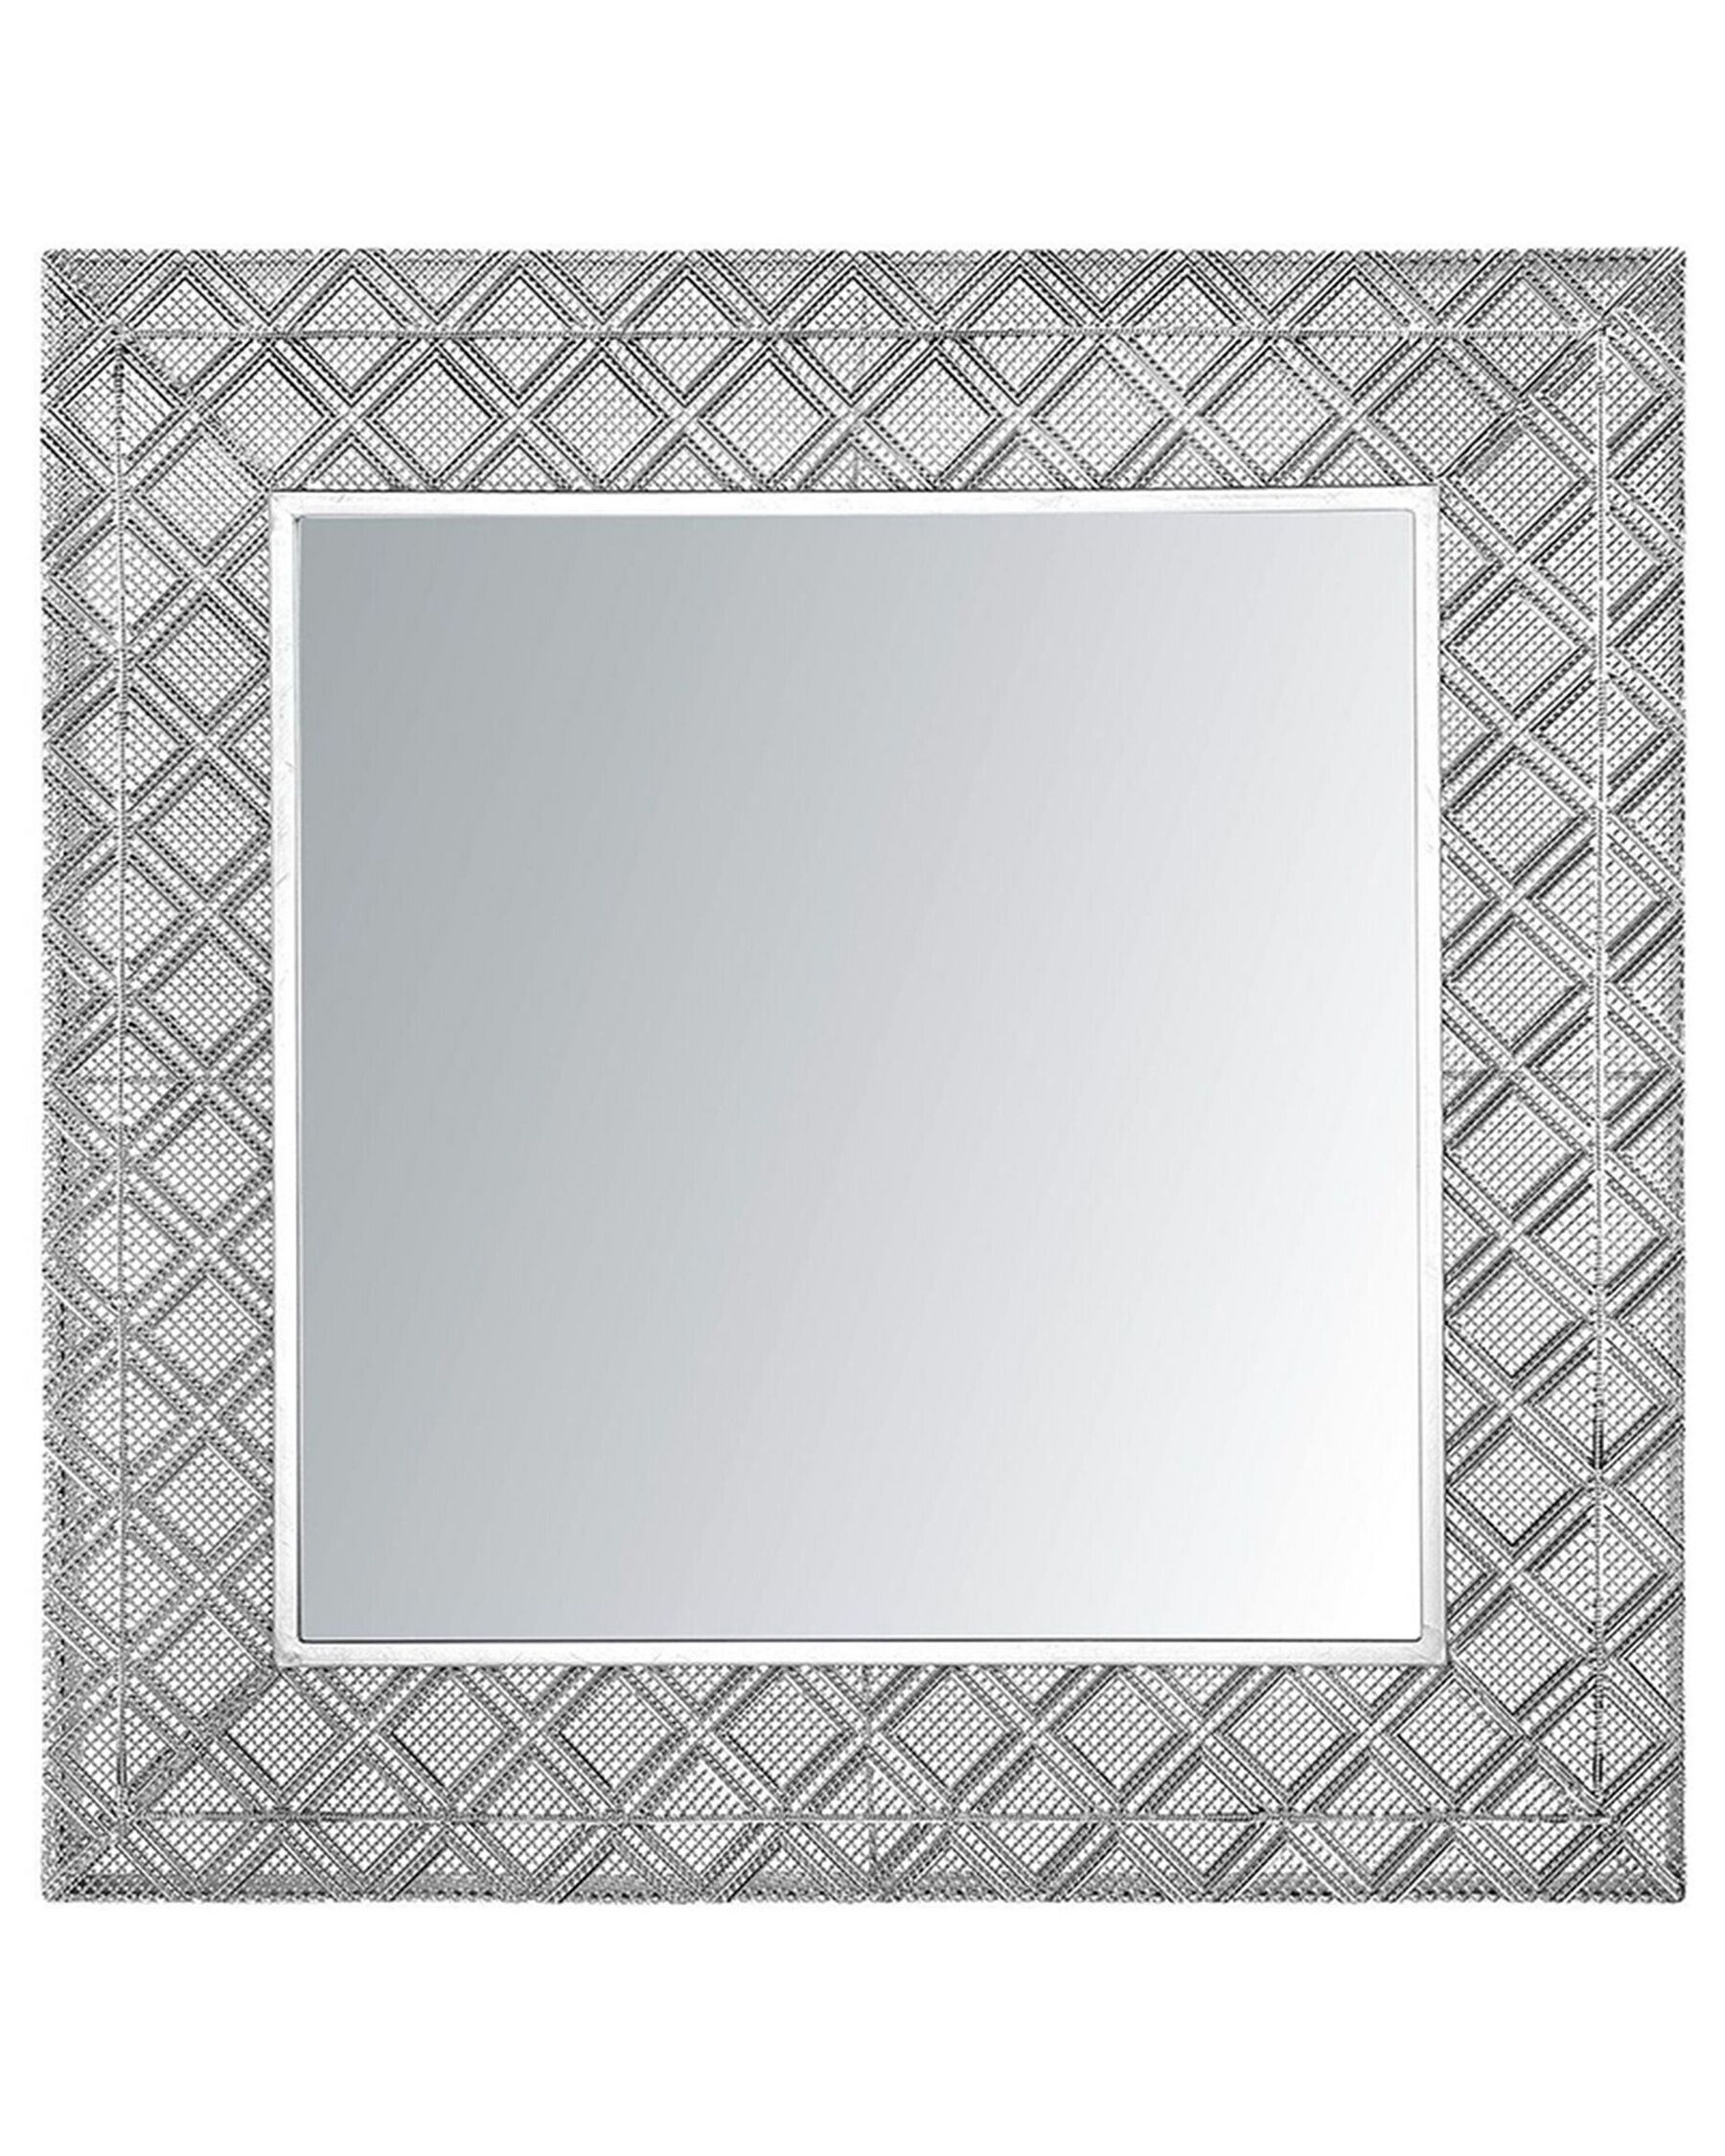 Stalowe lustro ścienne 80 x 80 cm srebrne EVETTES_747456